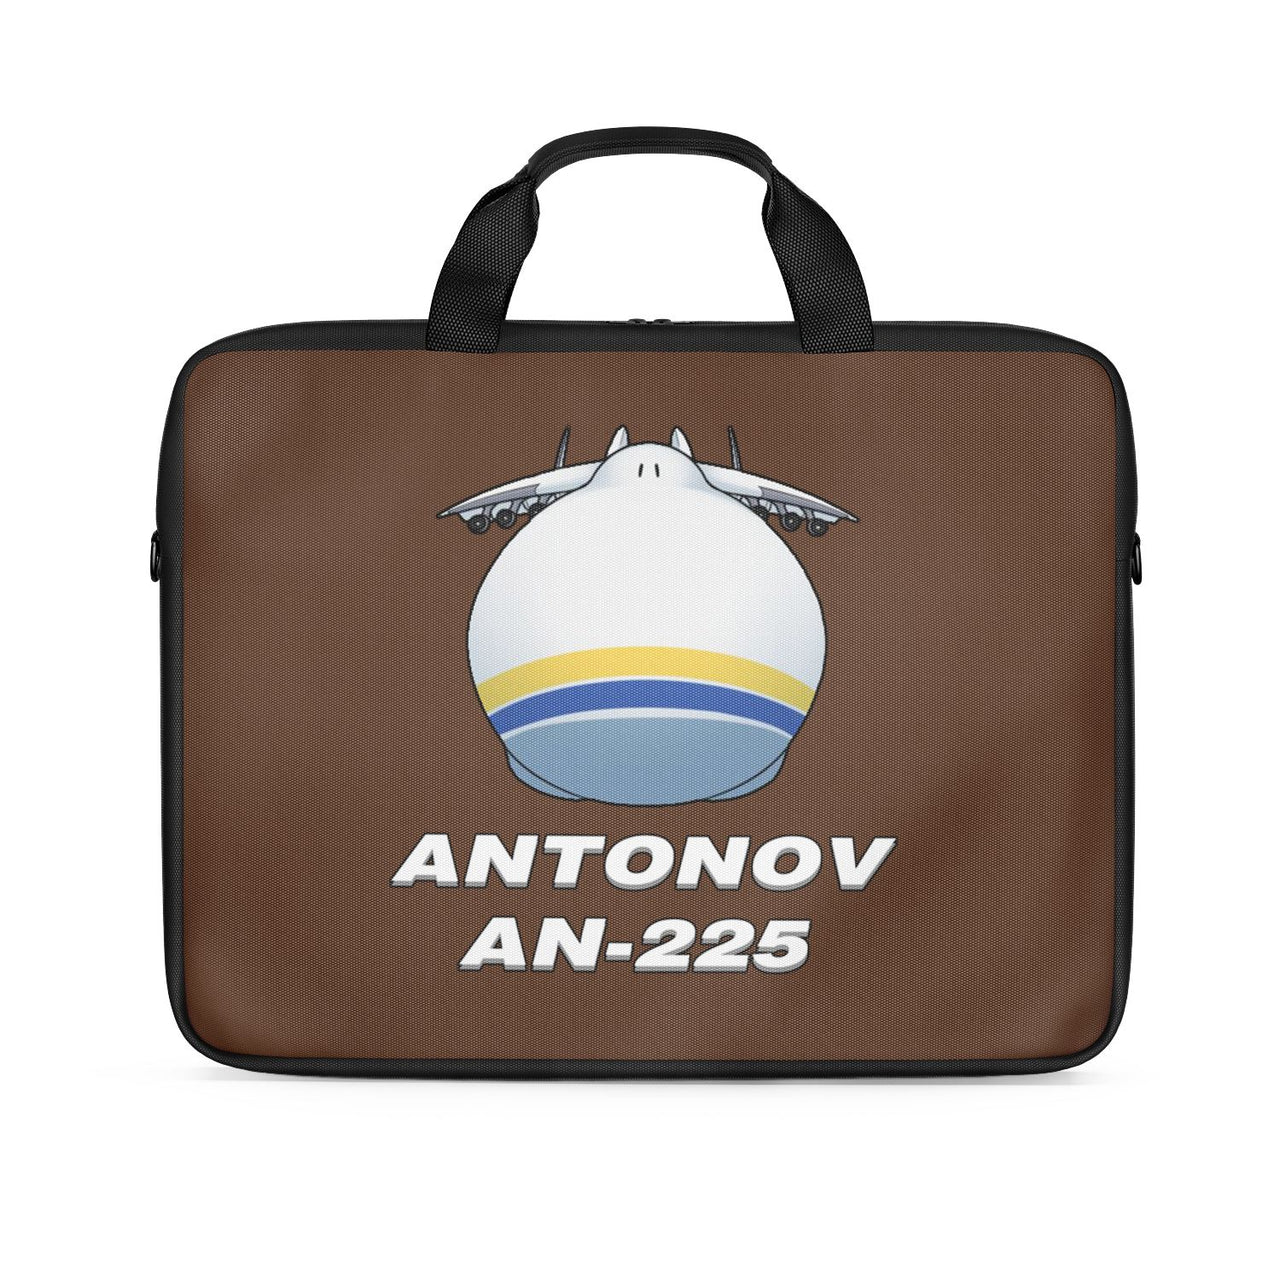 Antonov AN-225 (20) Designed Laptop & Tablet Bags